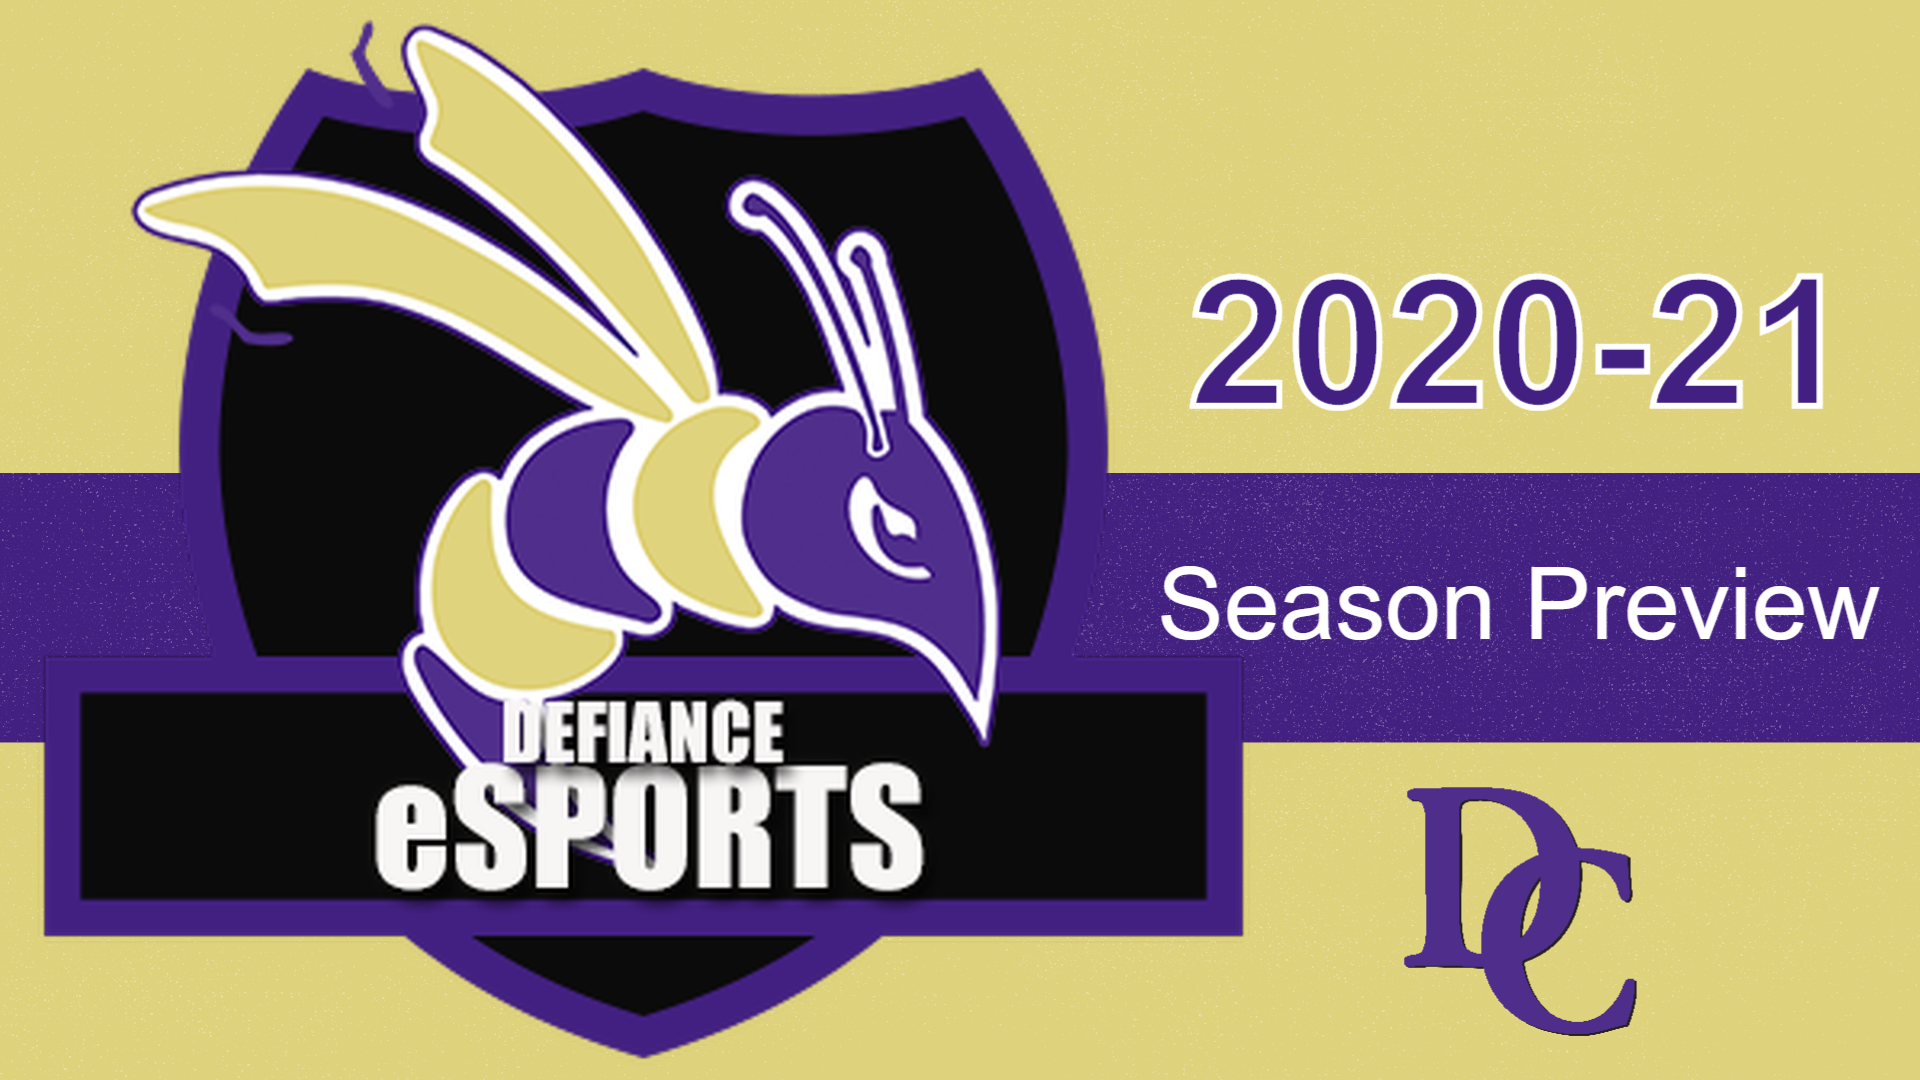 Esports starts 2020-21 season on Saturday with new coach